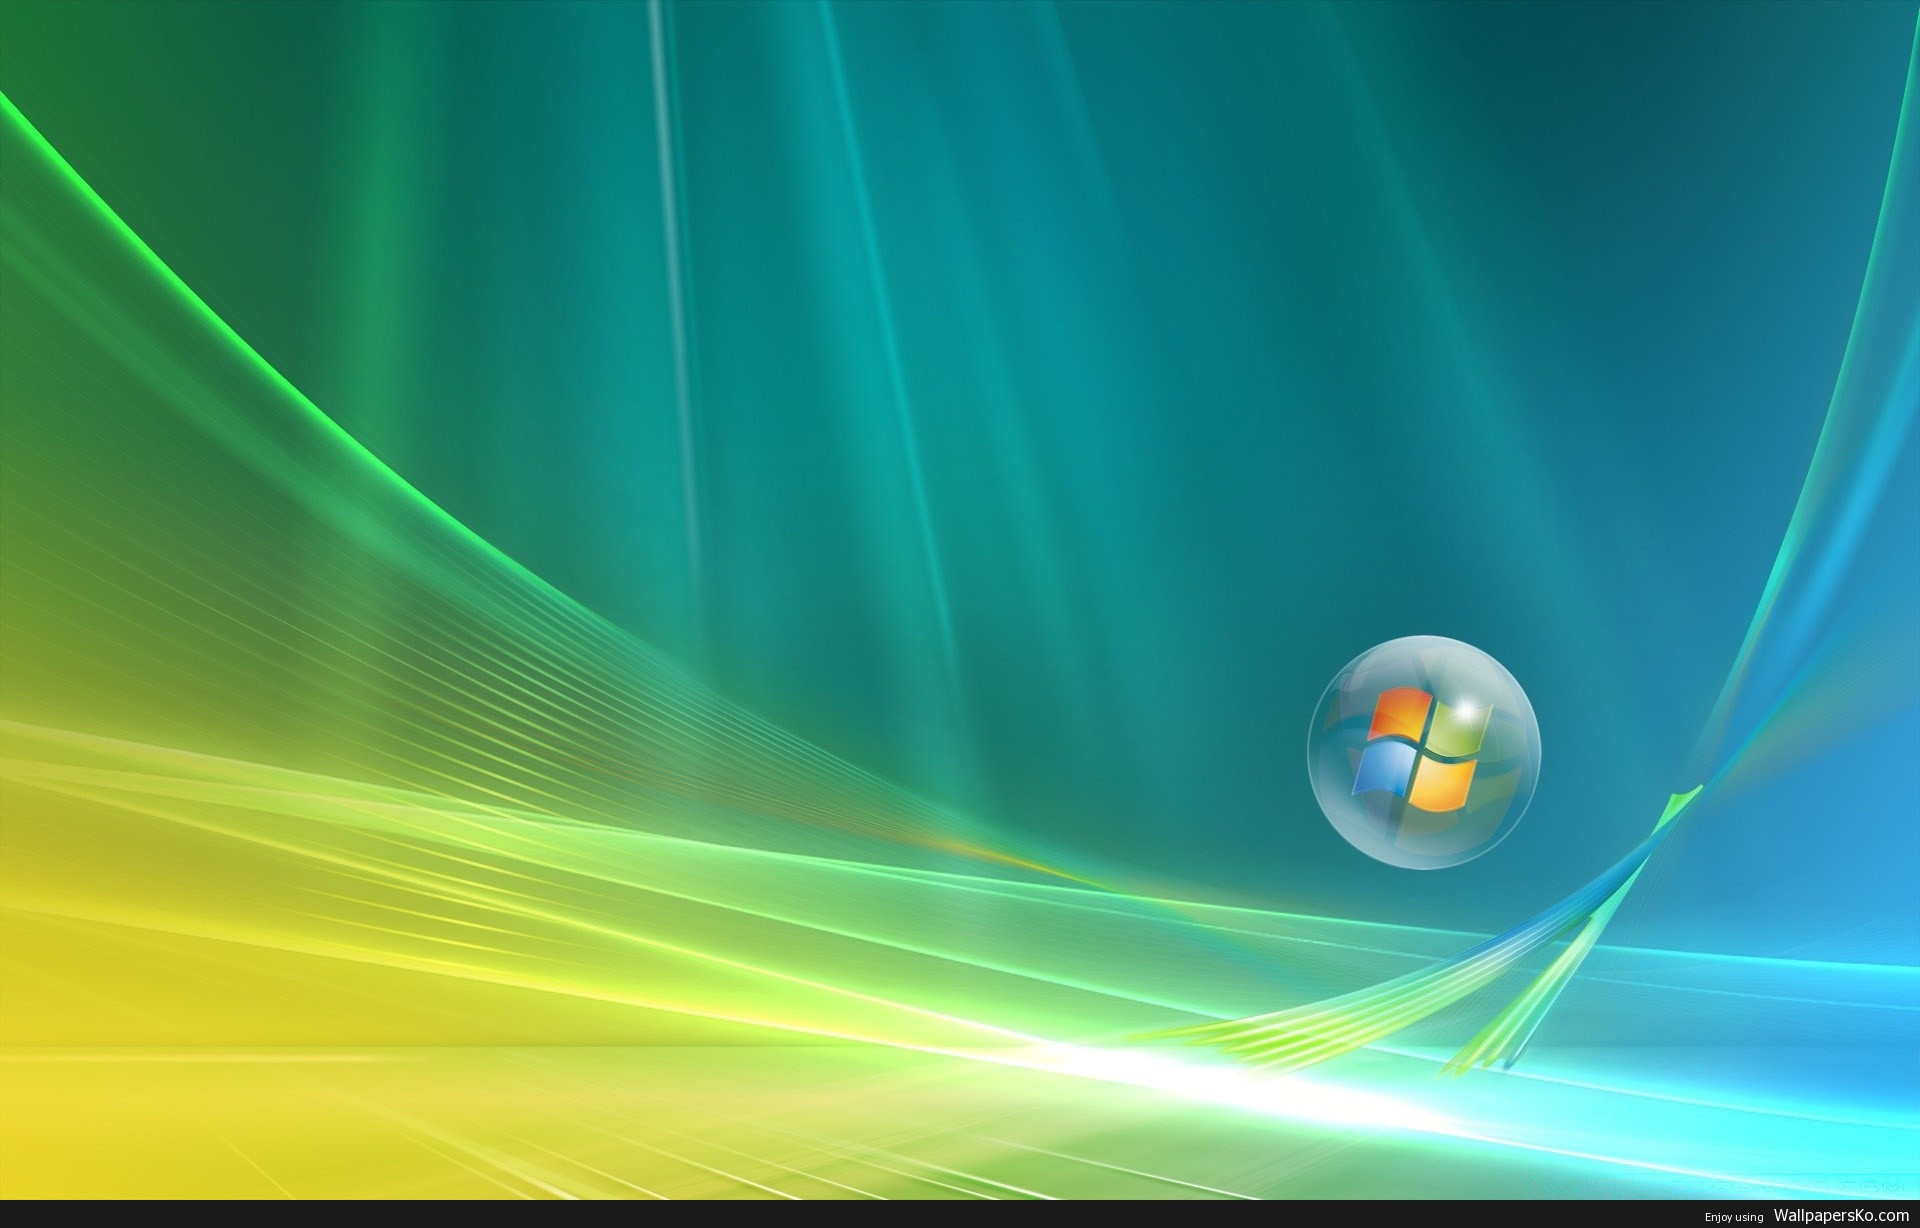 Windows Vista Aero Wallpaper